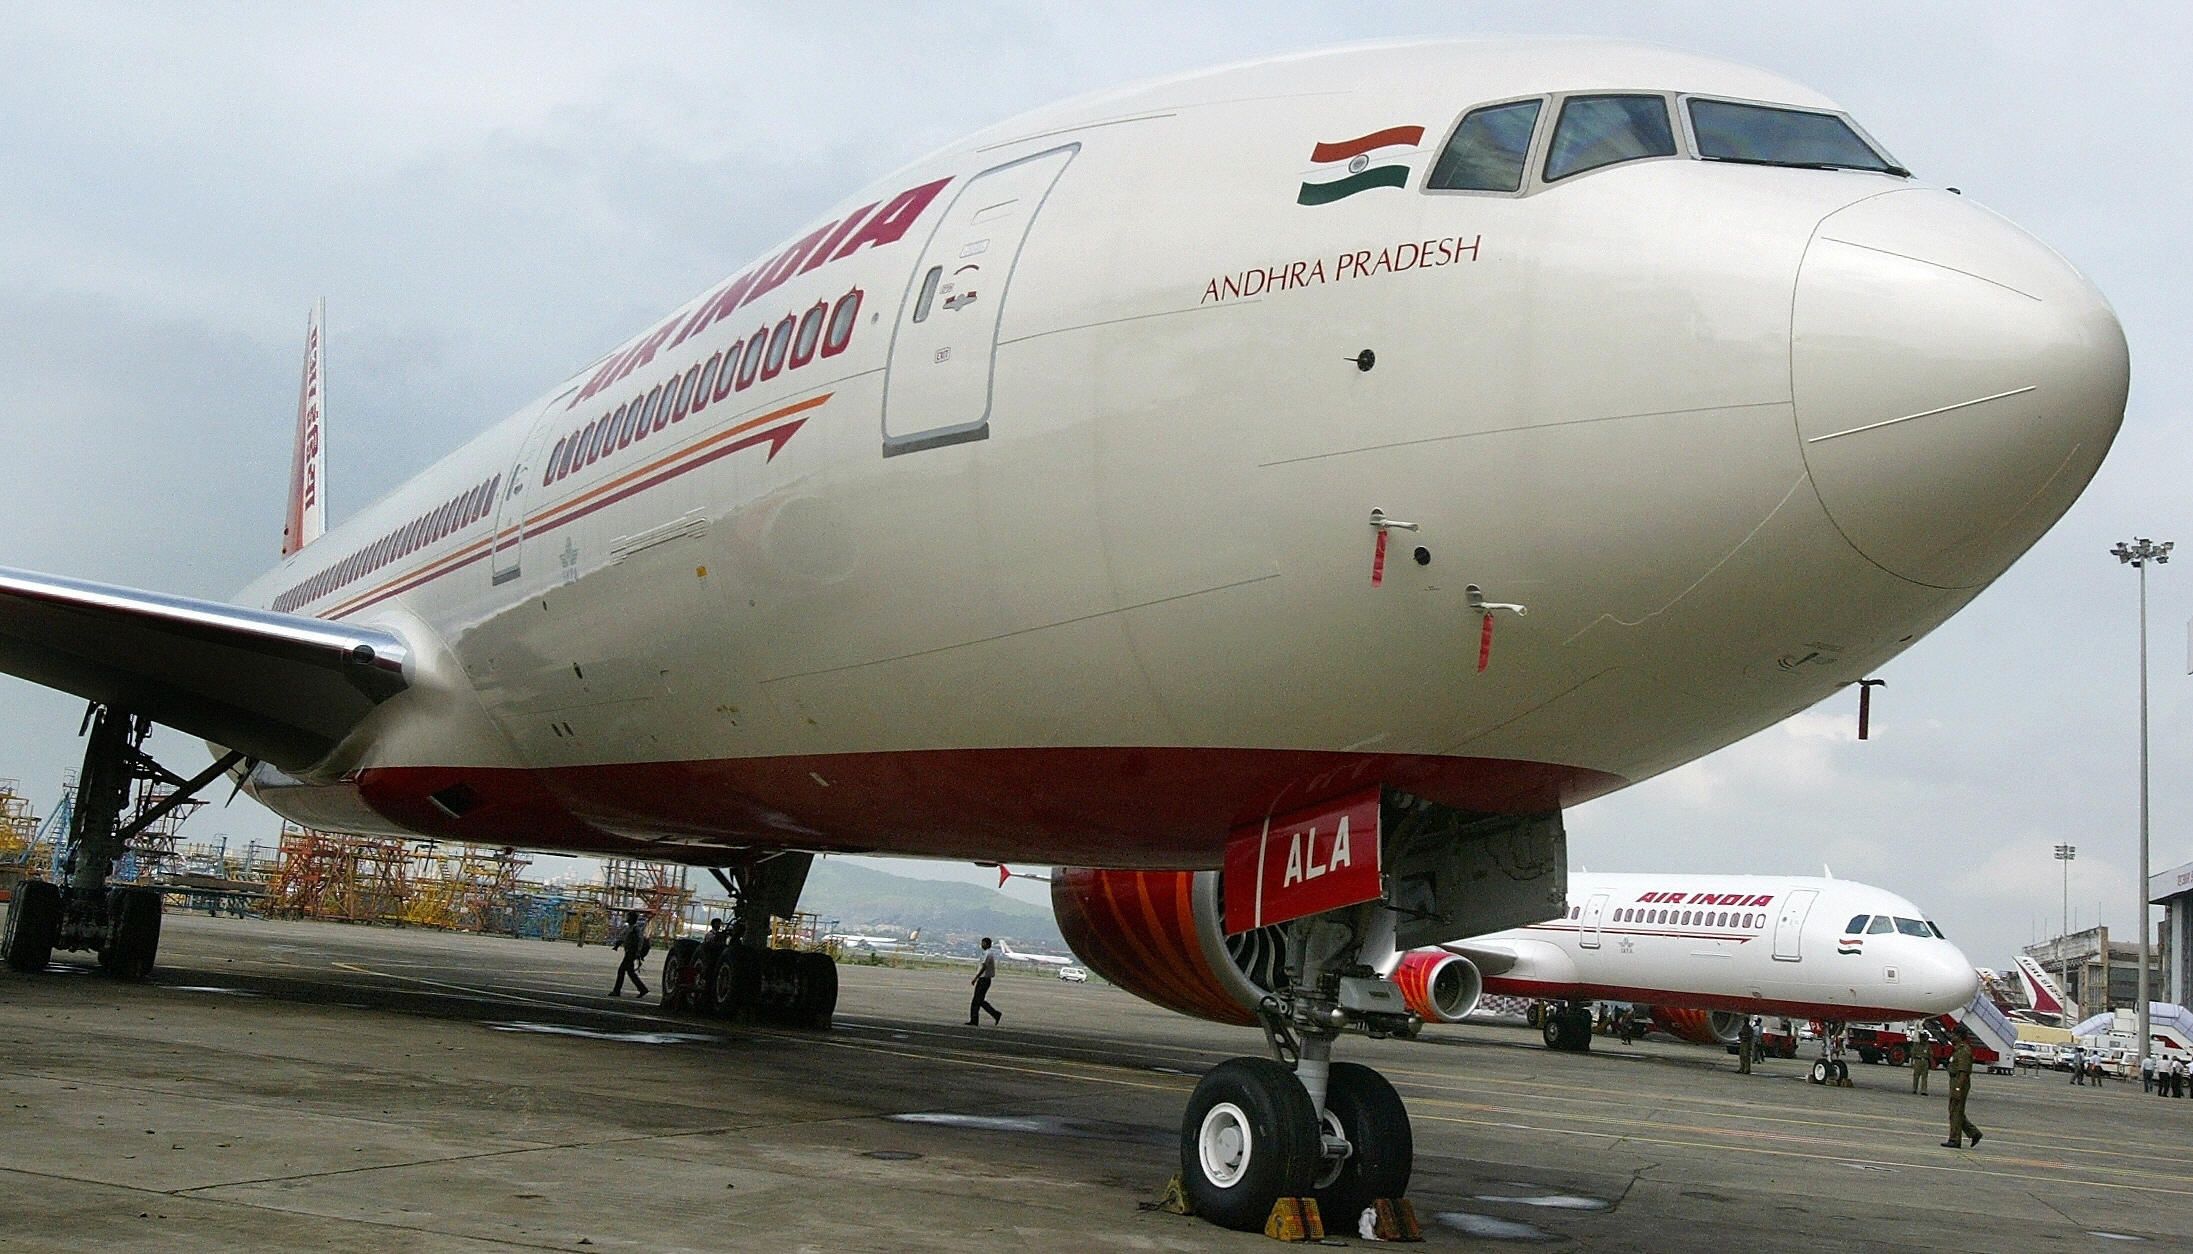 Air India Boeing 777-200LR on the tarmac of Chattrapati Shivaji International Airport in Mumbai